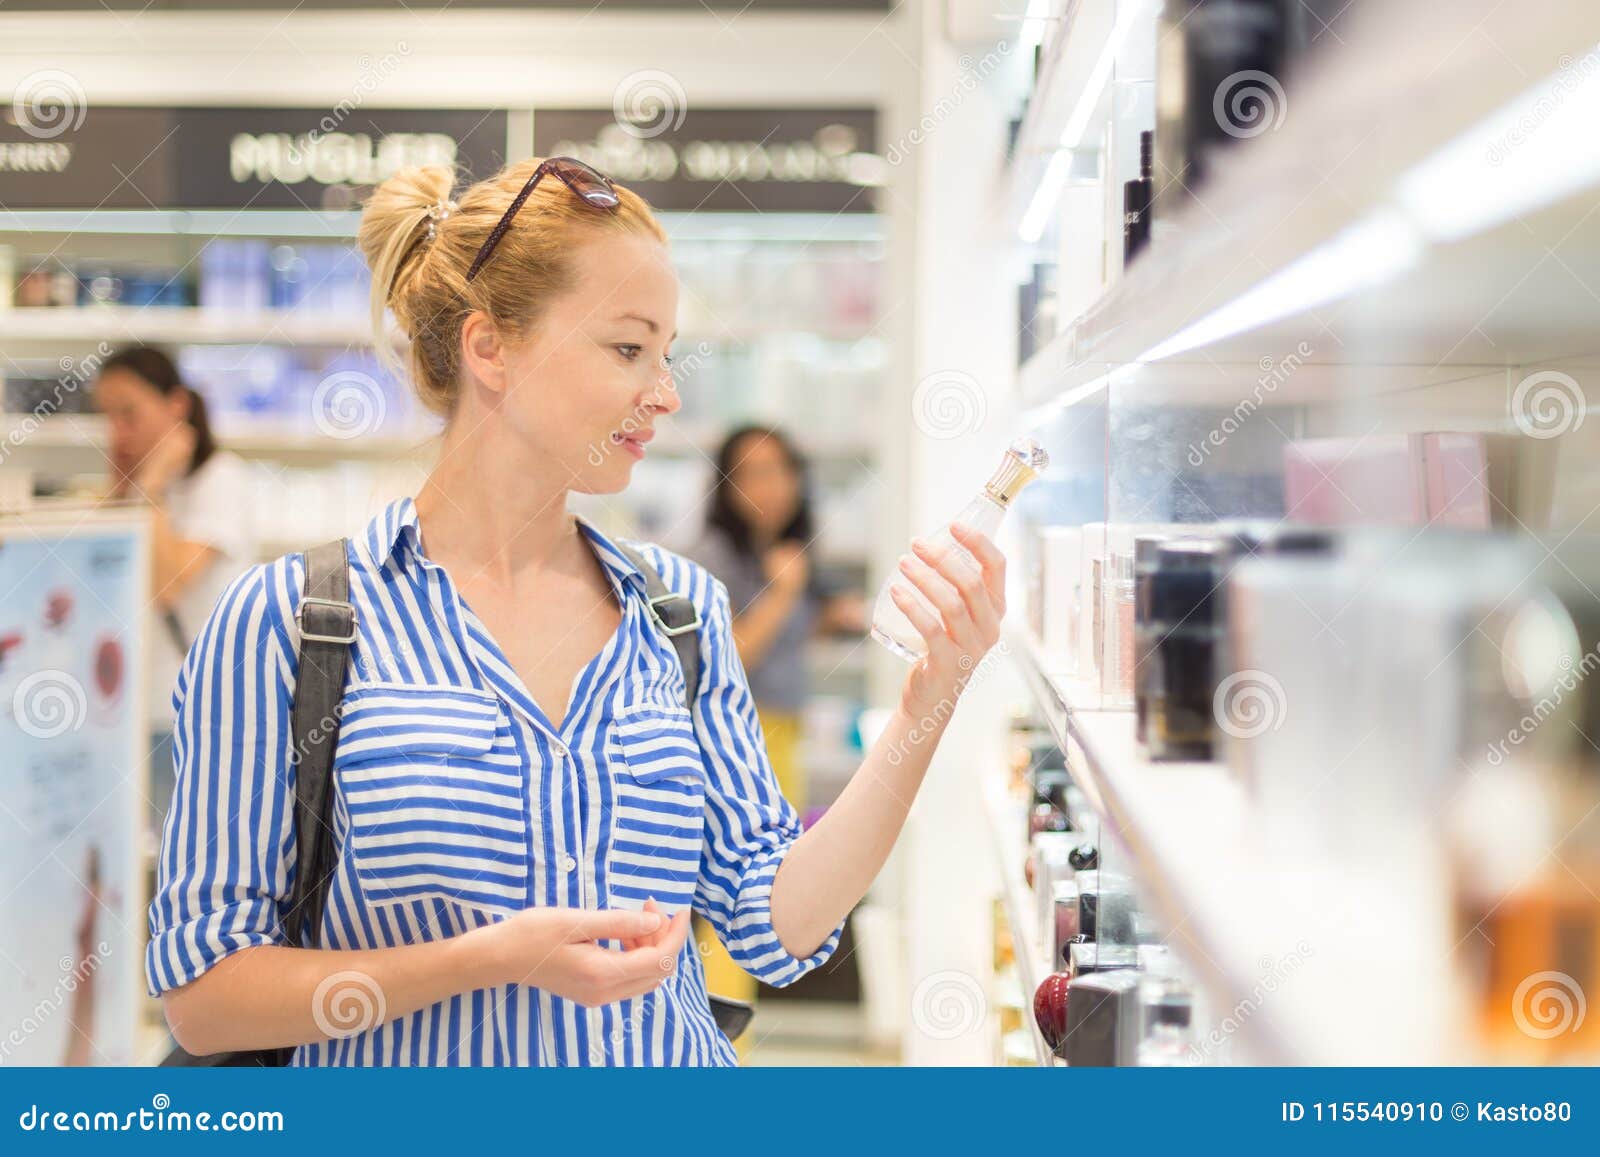 elegant blond young woman choosing perfume in retail store.